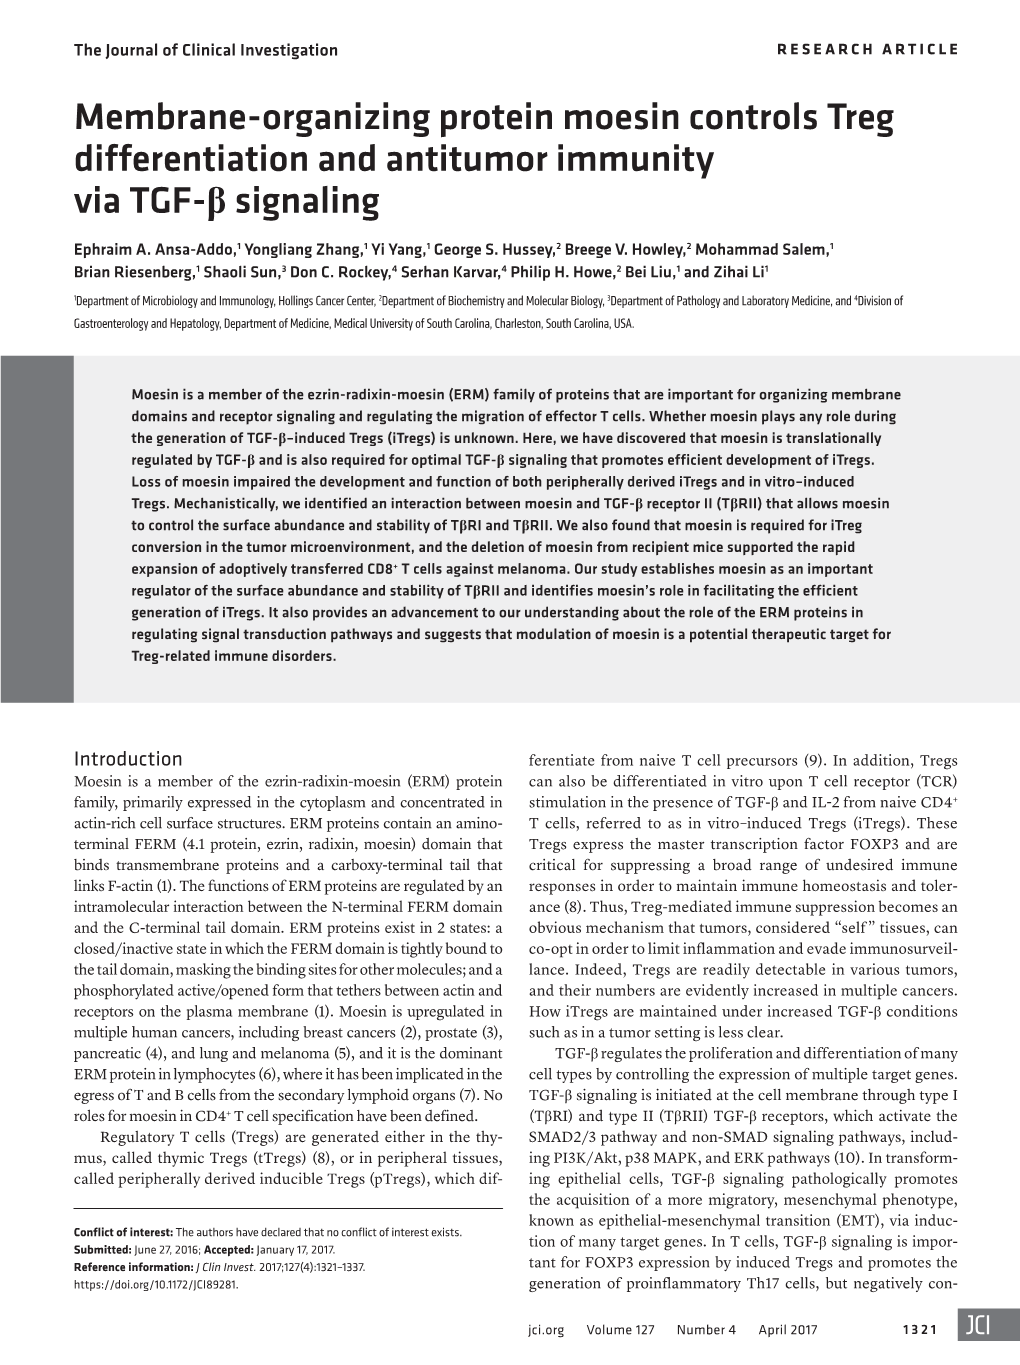 Membrane-Organizing Protein Moesin Controls Treg Differentiation and Antitumor Immunity Via TGF-Β Signaling